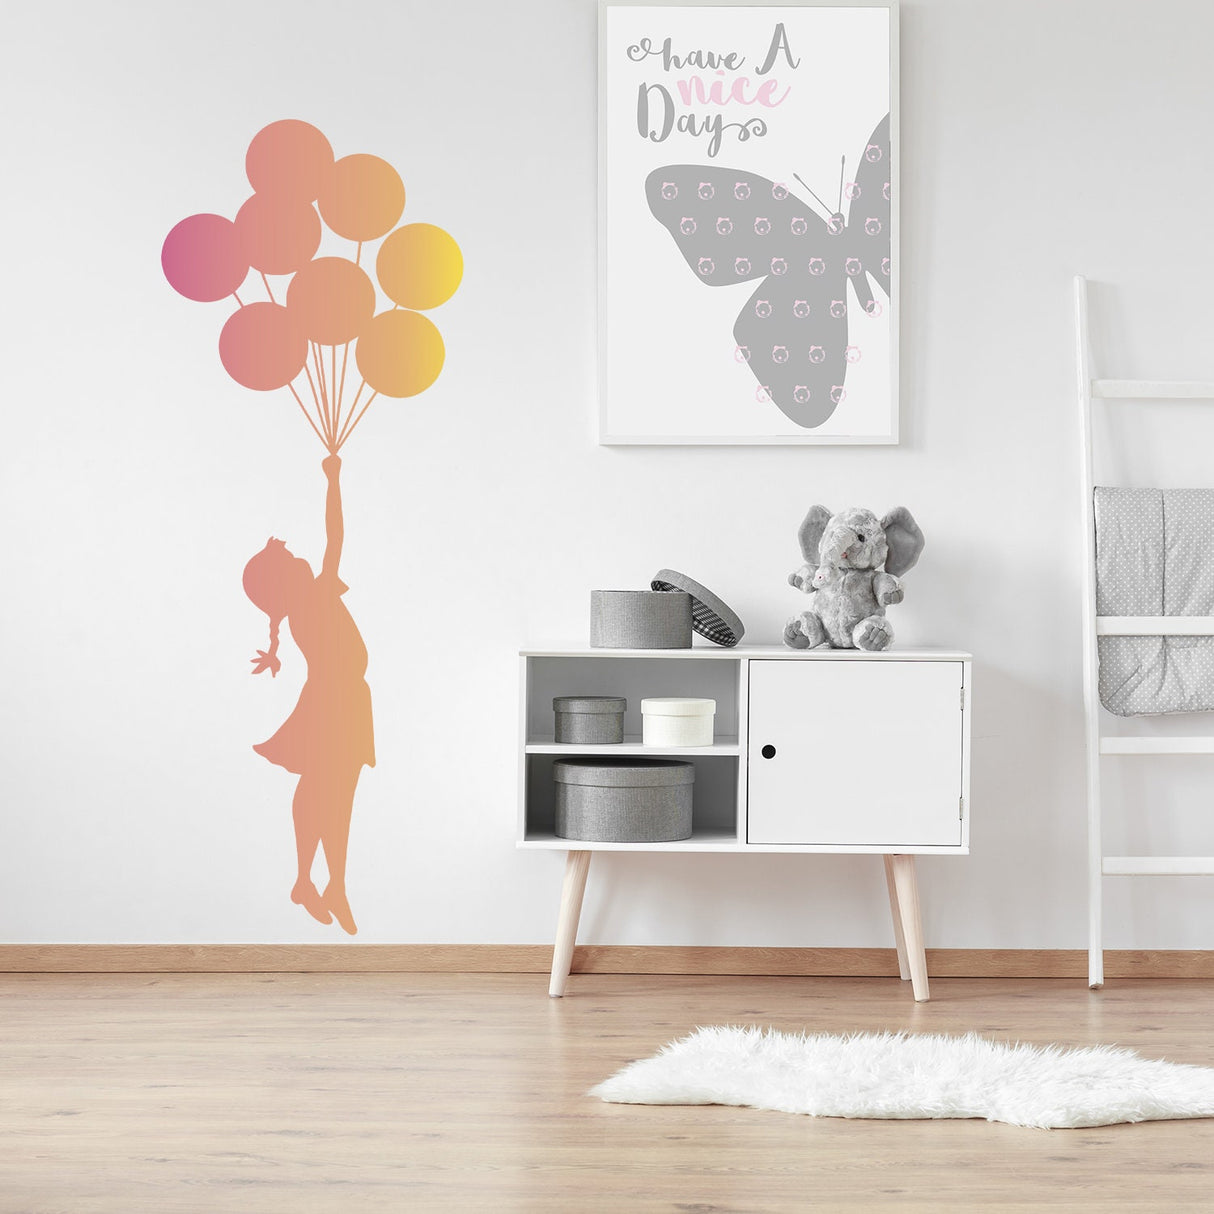 Balloon Girl Banksy Wall Sticker - Hot Air Nursery Baby Decor Vinyl Room Cute Decal